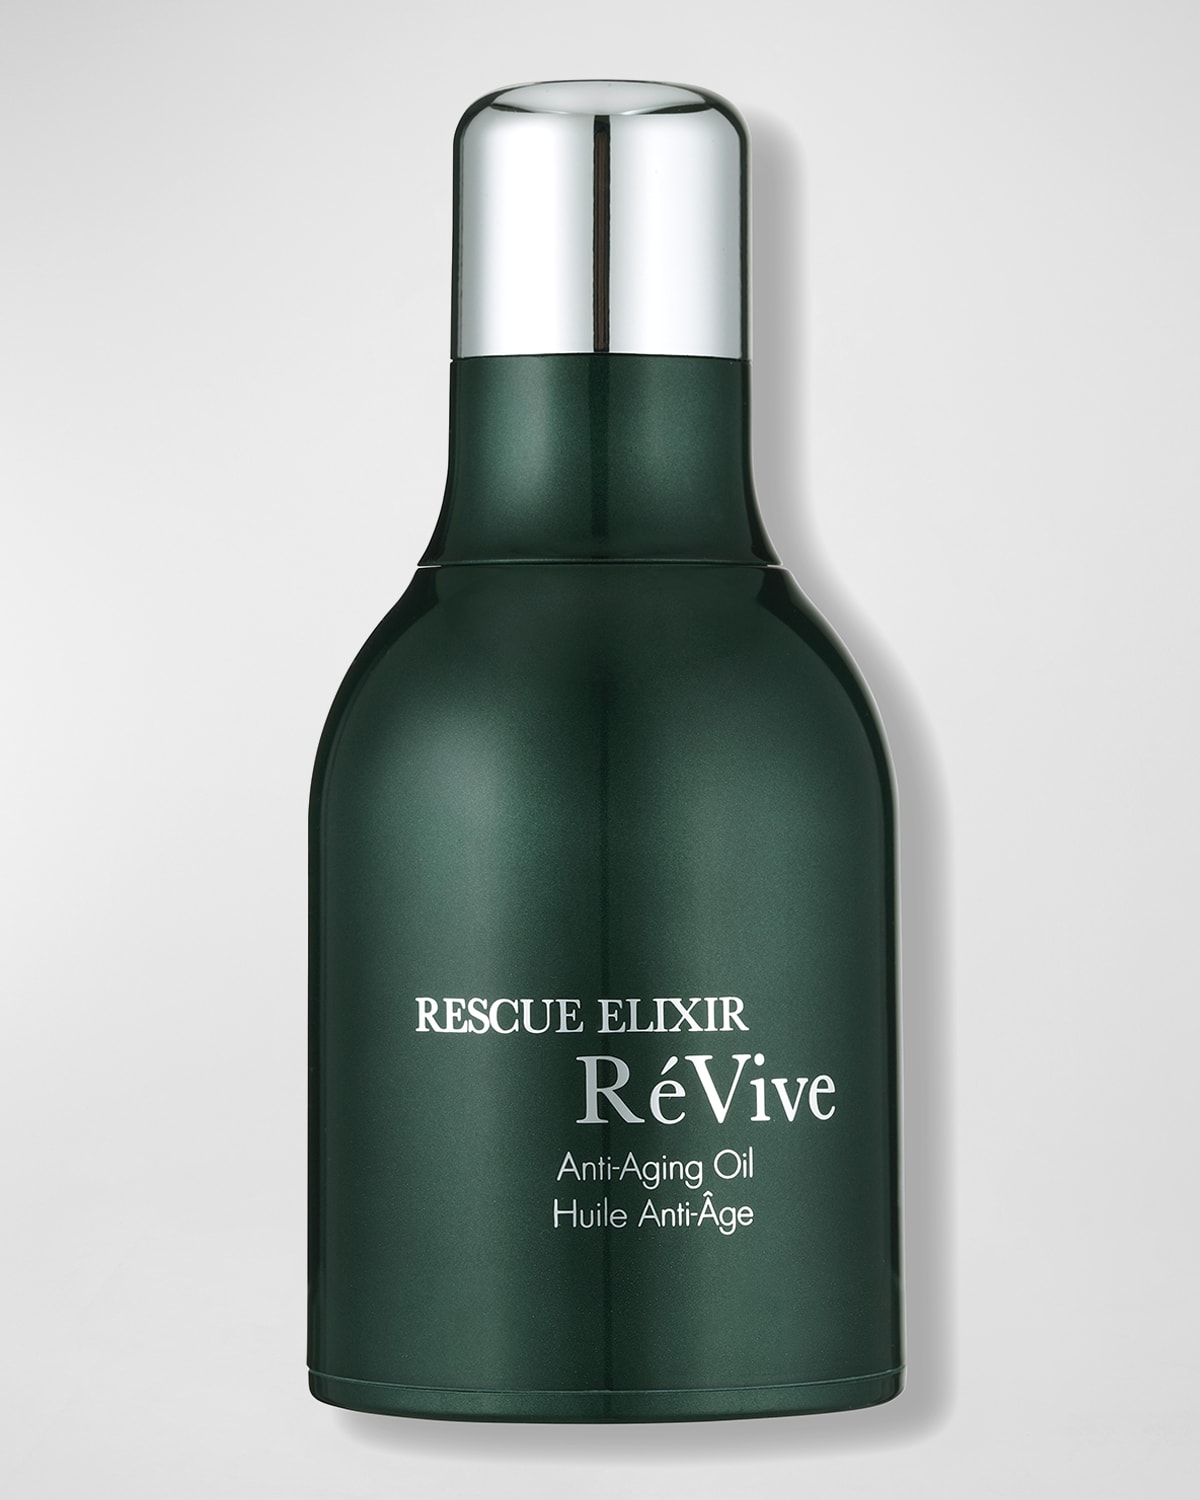 ReVive 1 oz. Rescue Elixir Anti-Aging Oil